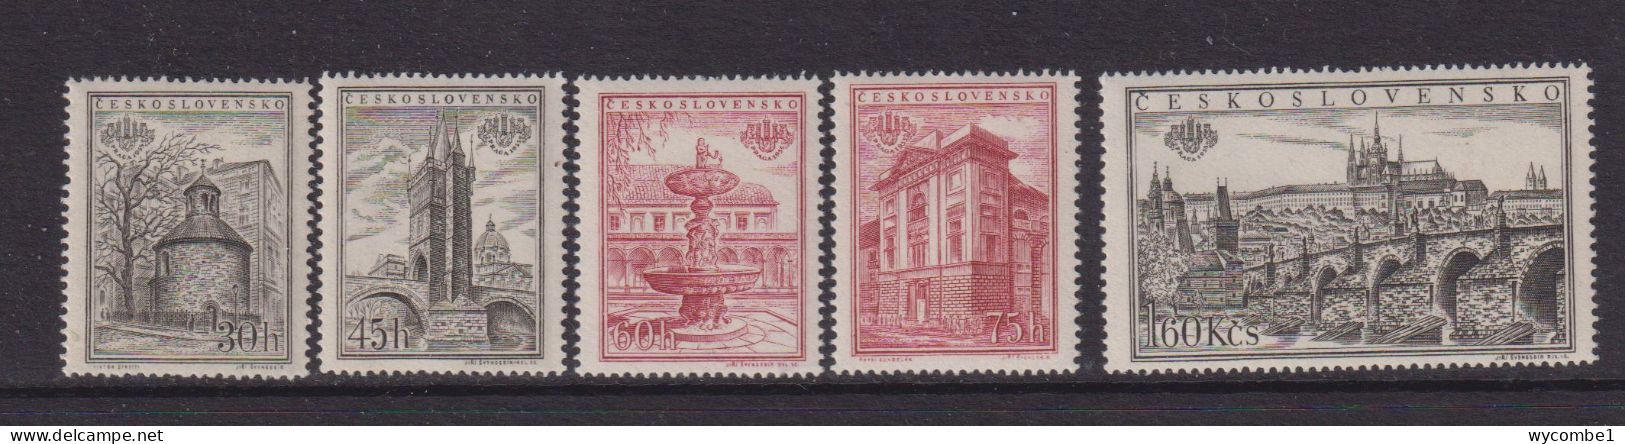 CZECHOSLOVAKIA  - 1955  Philatelic Exhibition Set  Never Hinged Mint - Unused Stamps